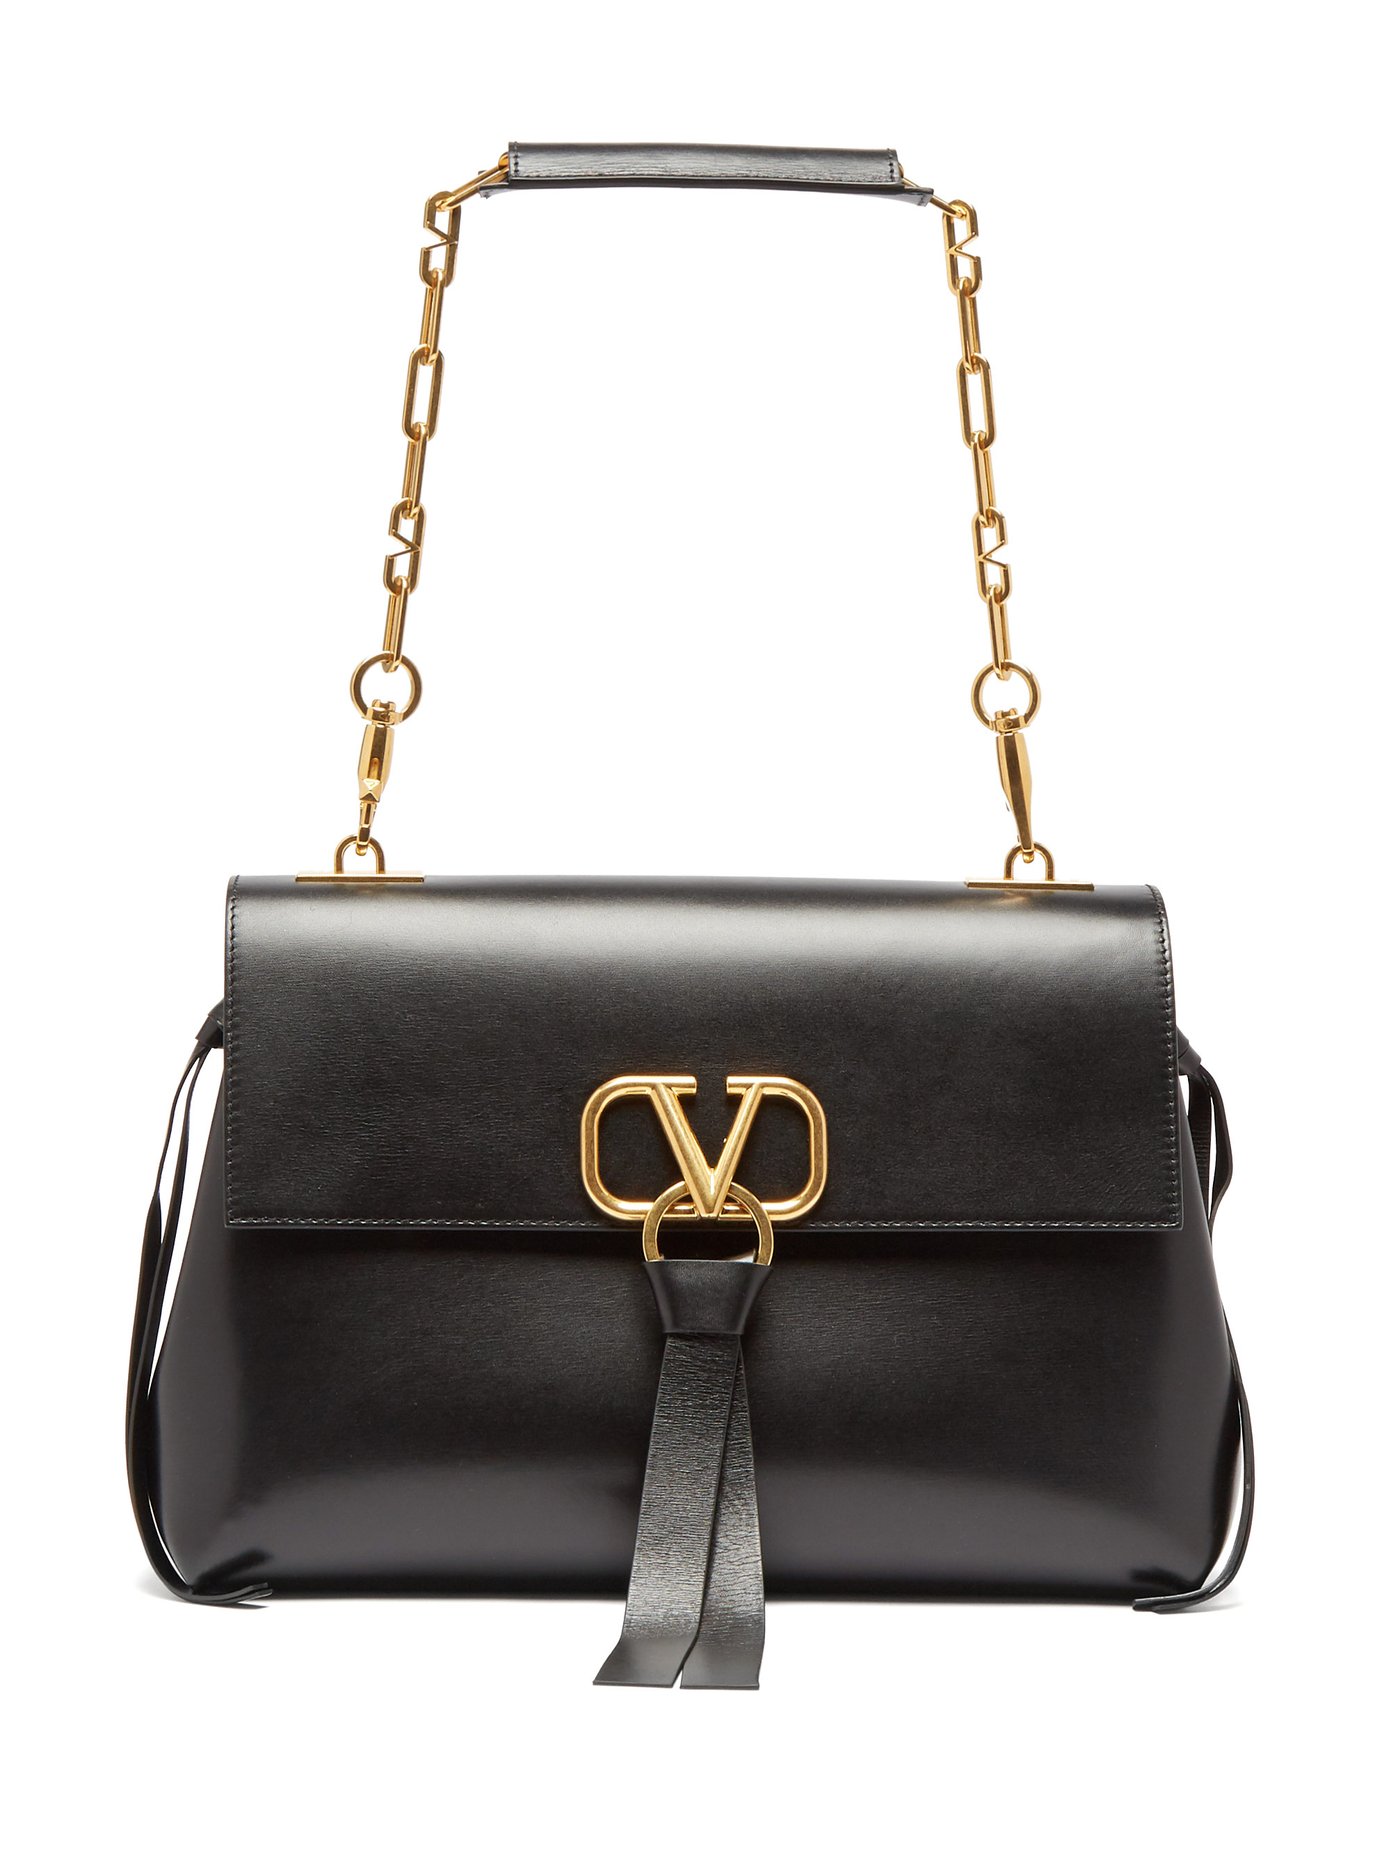 Valentino Garavani VRING Medium leather shoulder bag black red #Sponsored # VRING, #Medium, #Valentino